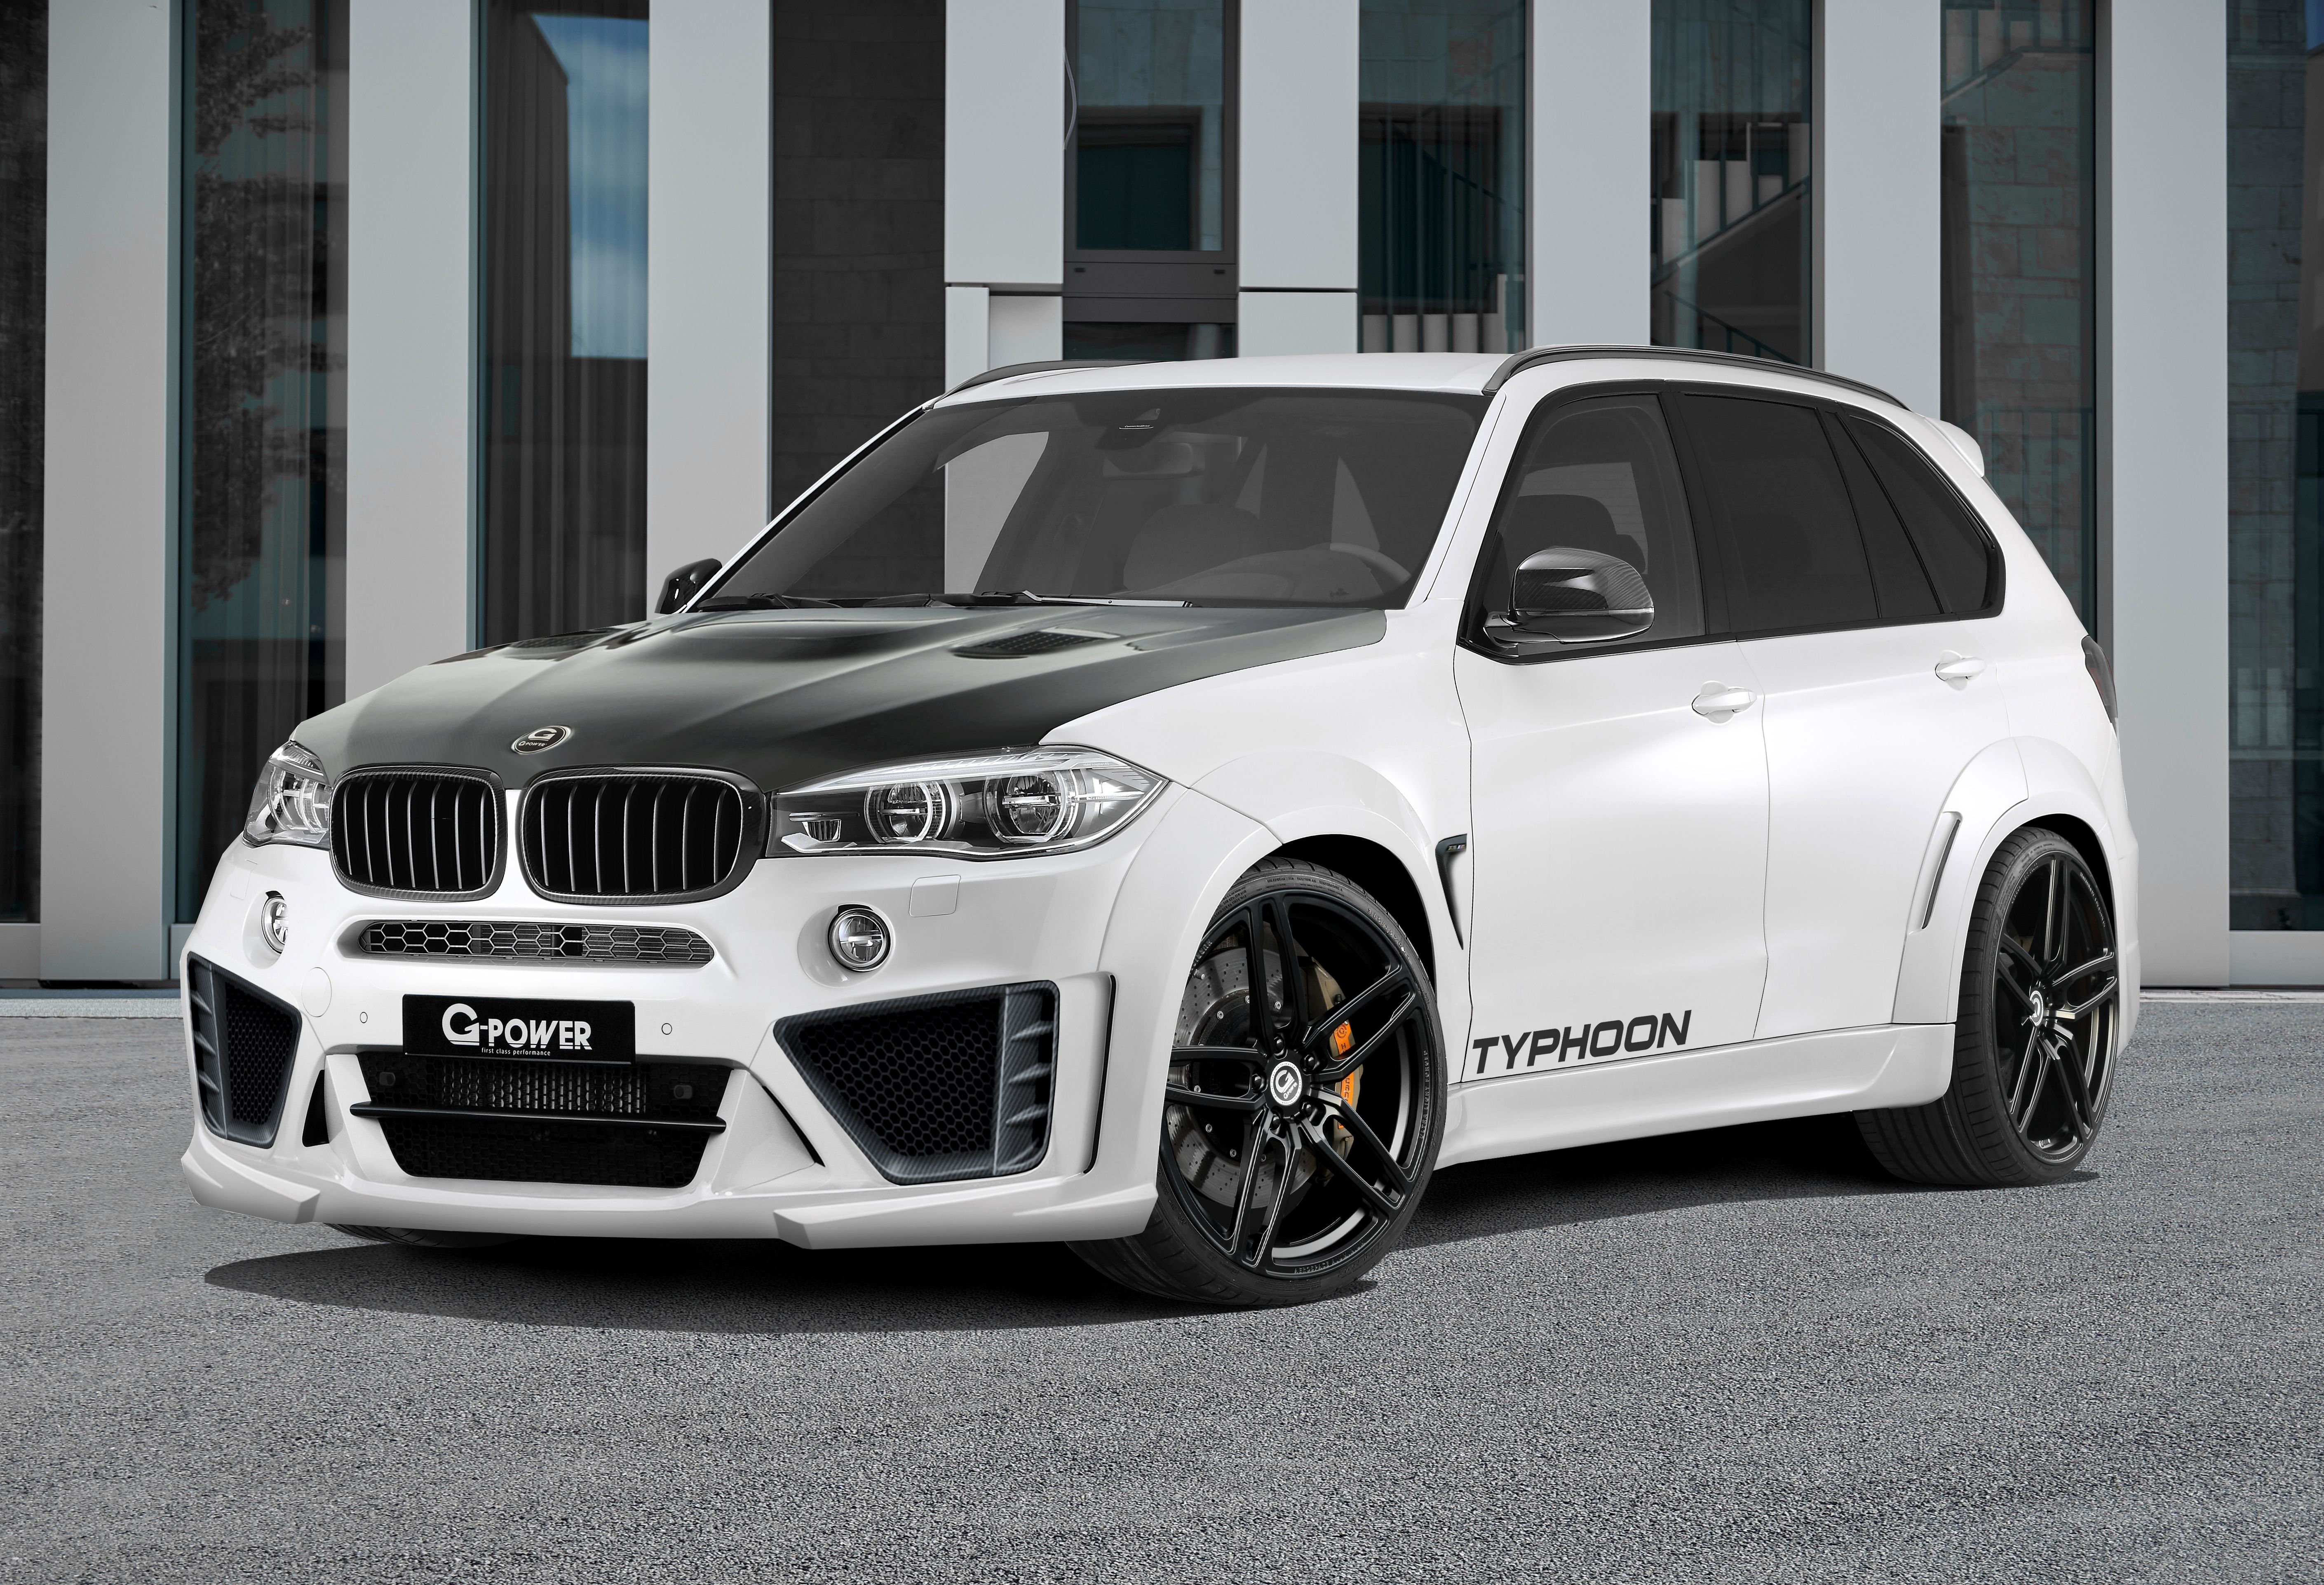 G Power BMW X5 Facelift TYPHOON Unveiled - autoevolution